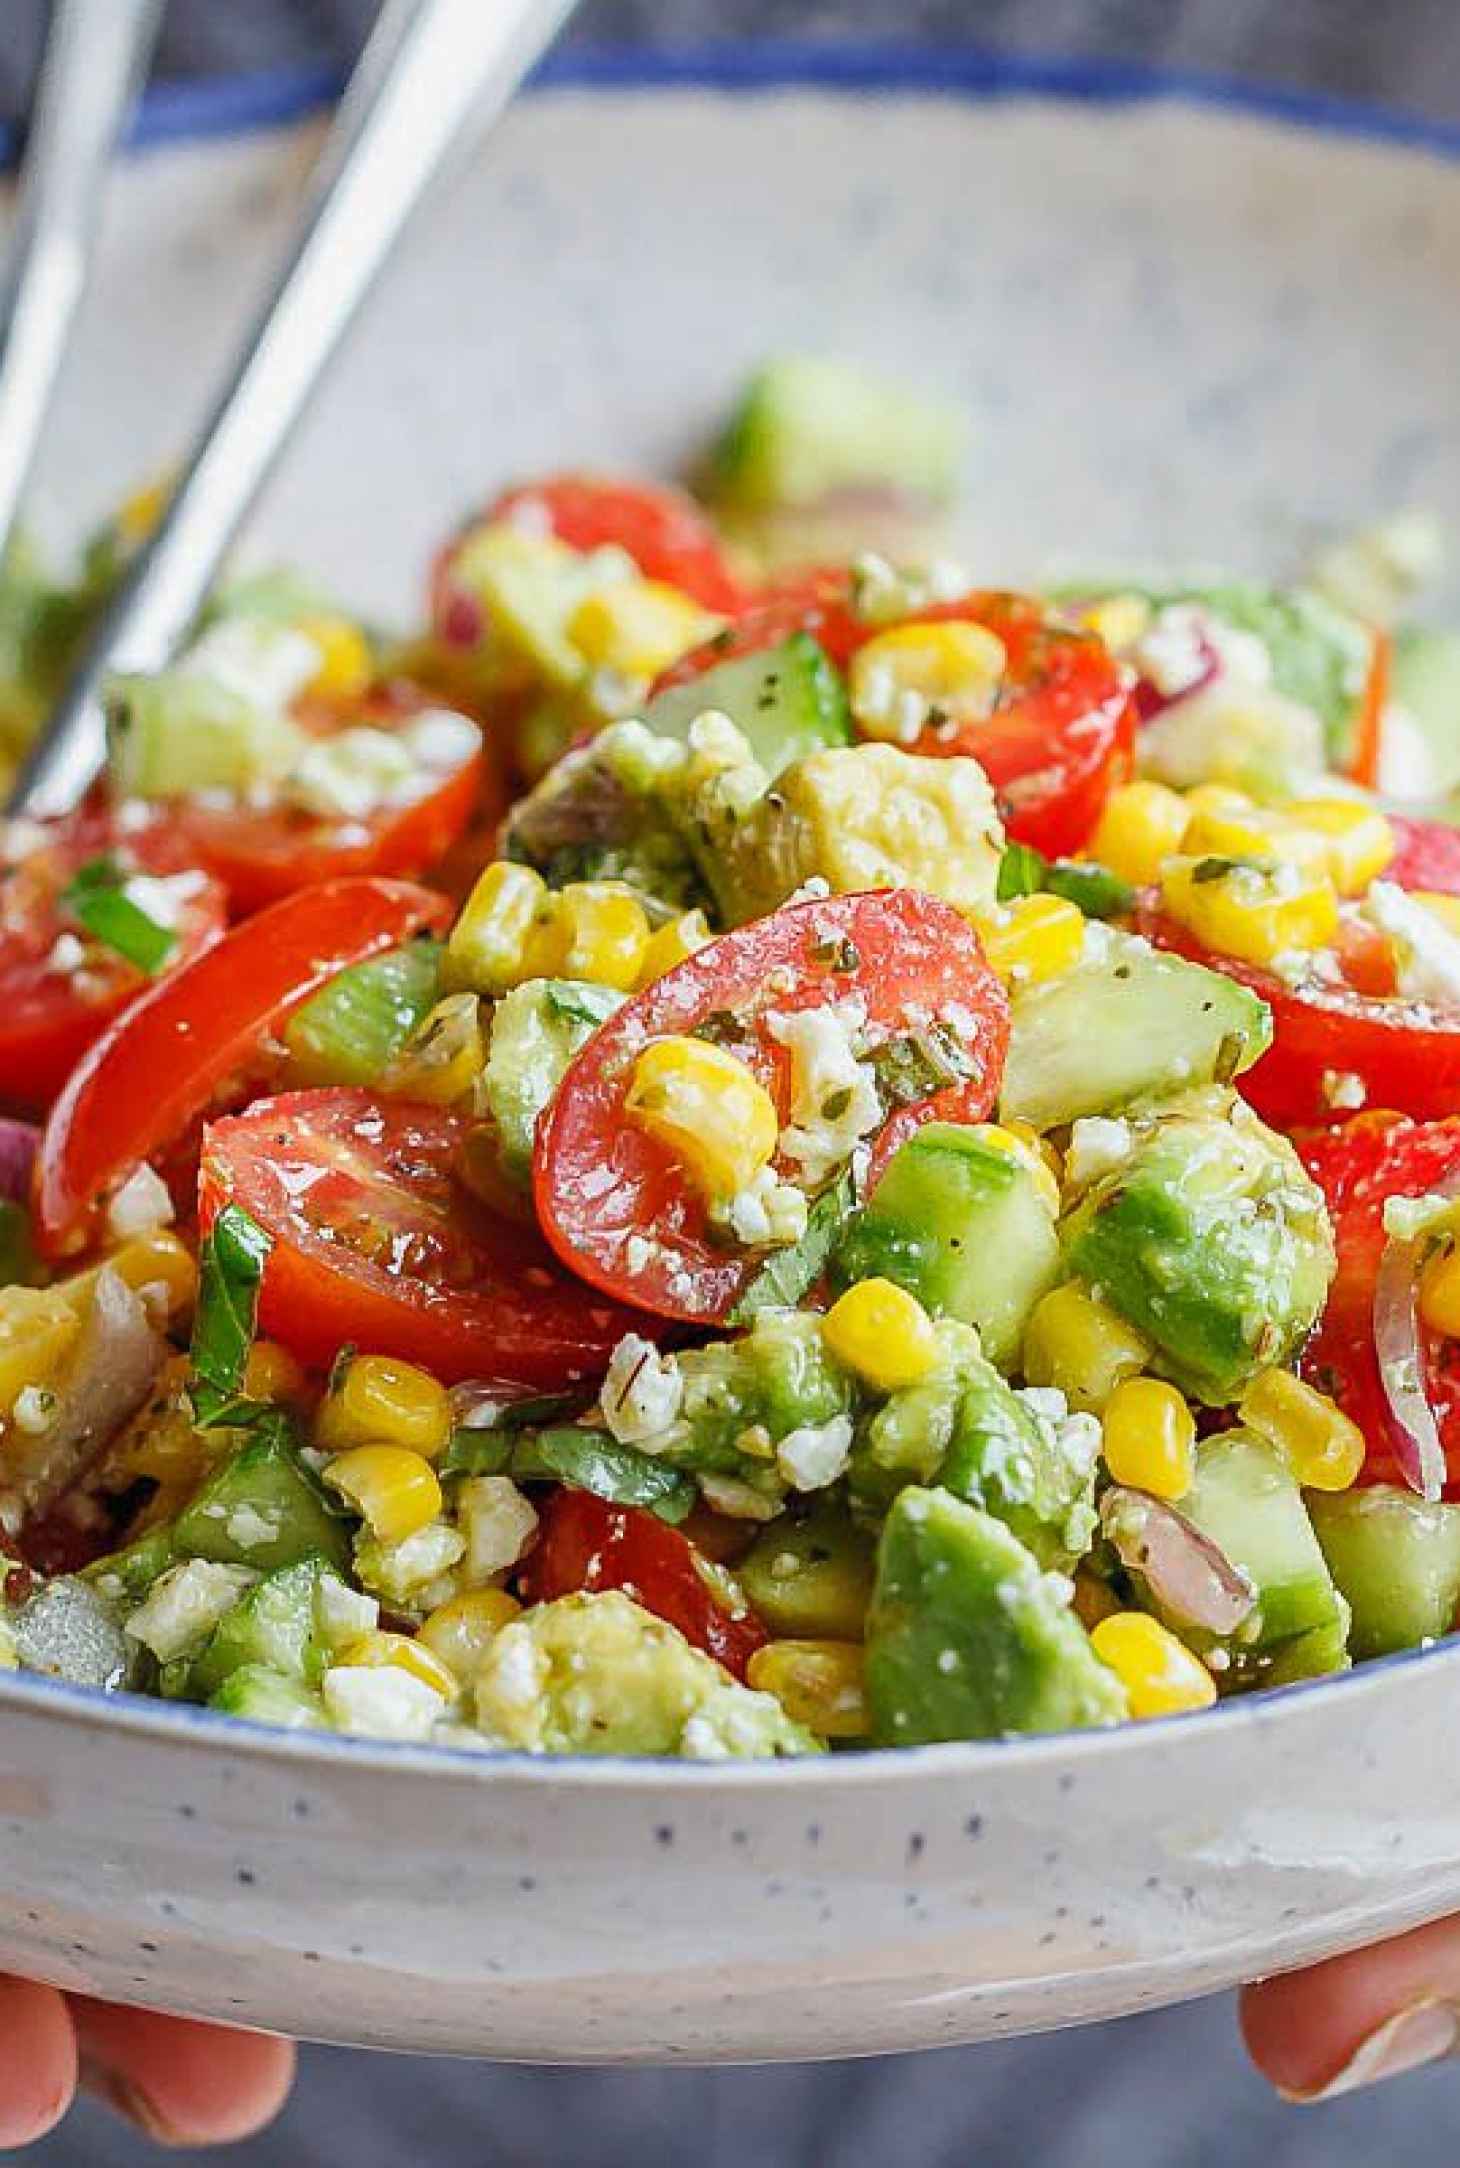 Avocado Corn Salad Recipe with Feta - #recipe by #eatwell101 - https://www.eatwell101.com/avocado-corn-salad-recipe